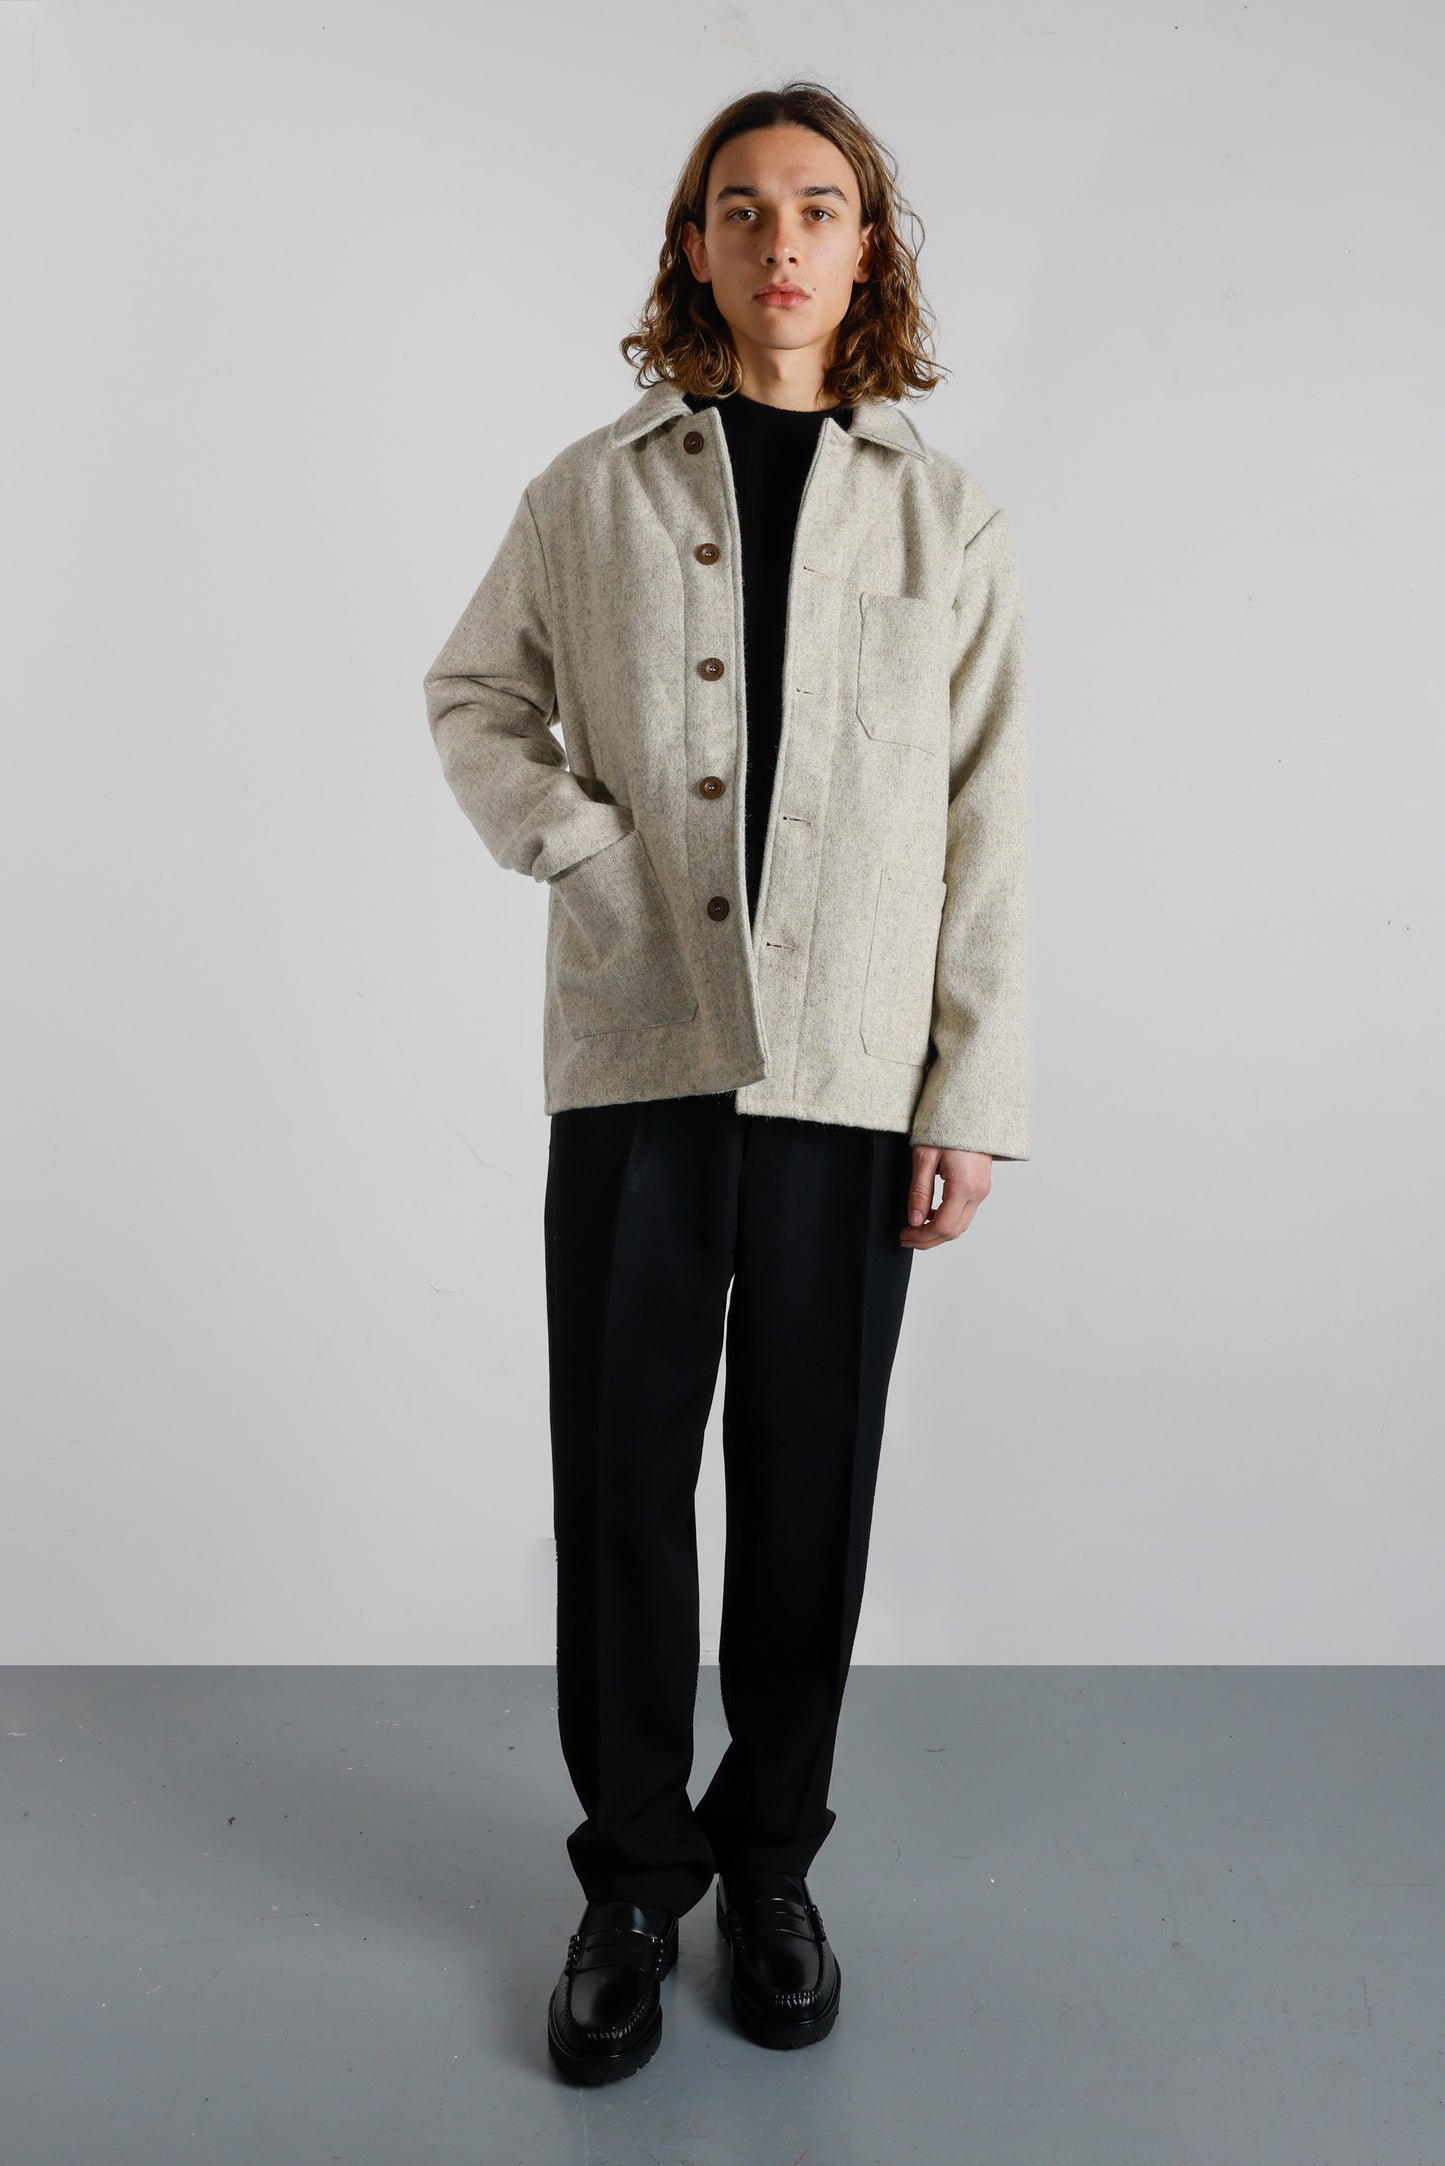 Work Jacket - Cream Wool